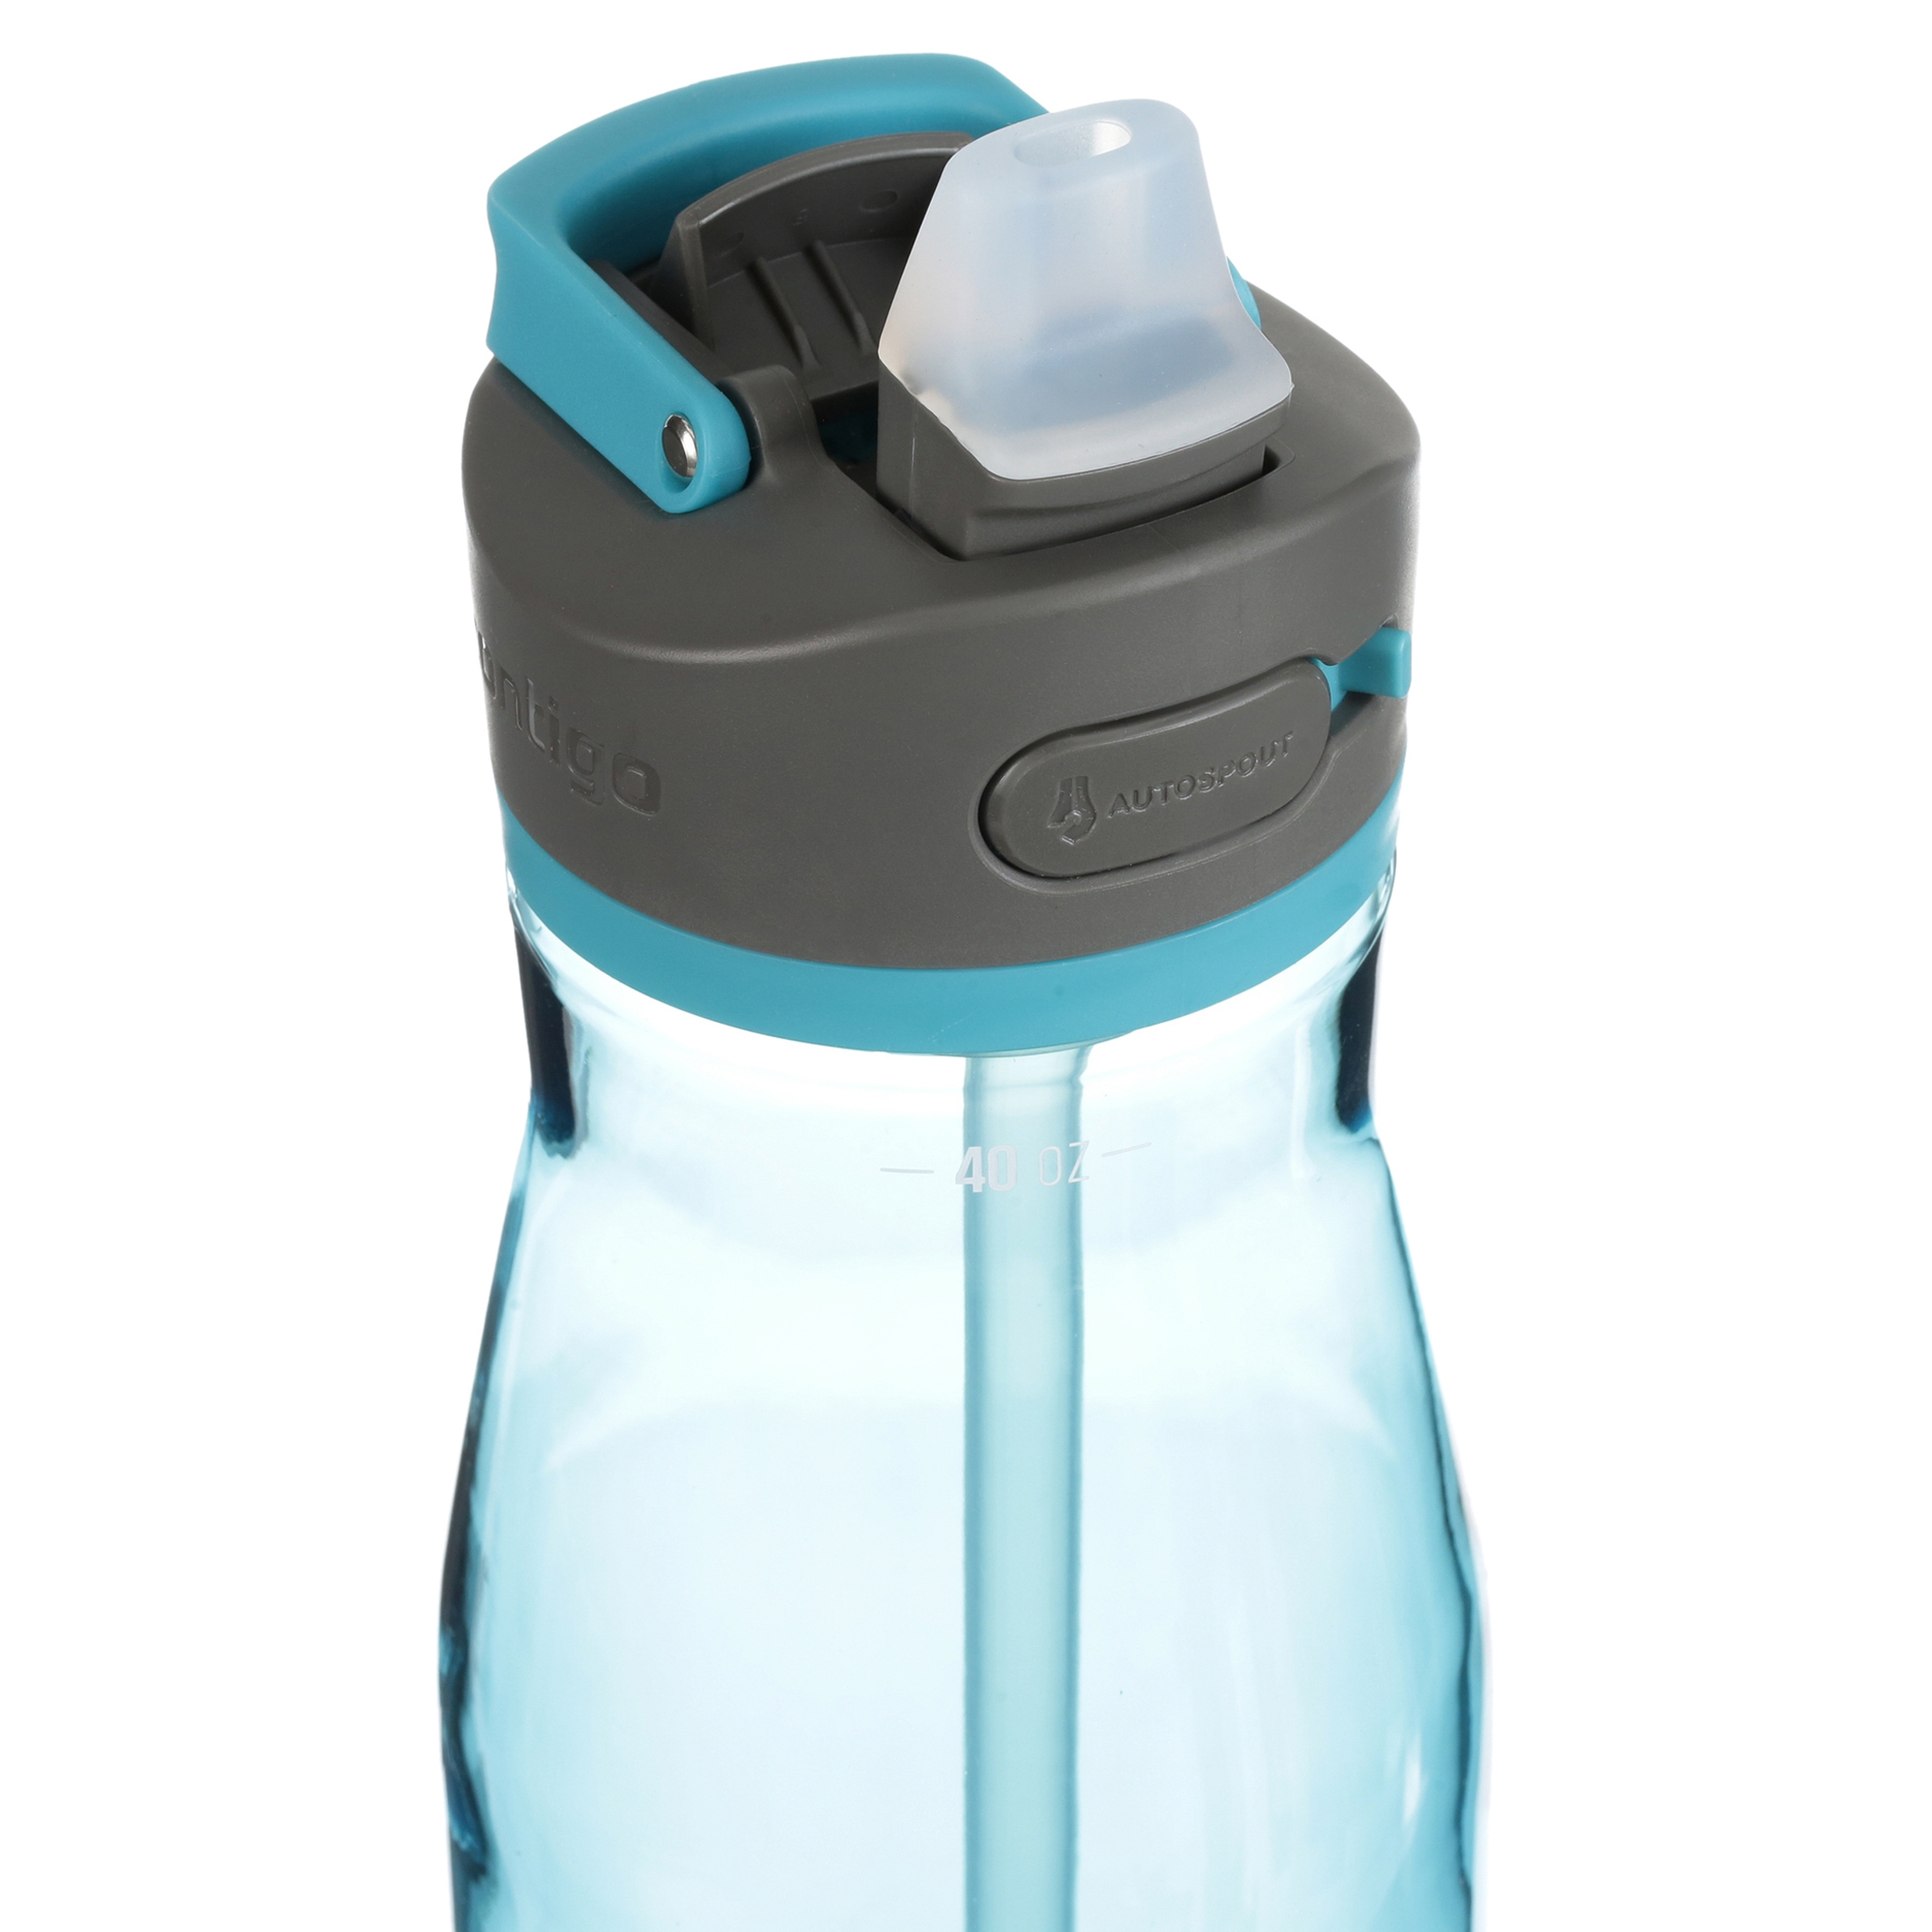 Contigo 32 oz. Ashland 2.0 Tritan Water Bottle with AutoSpout Lid